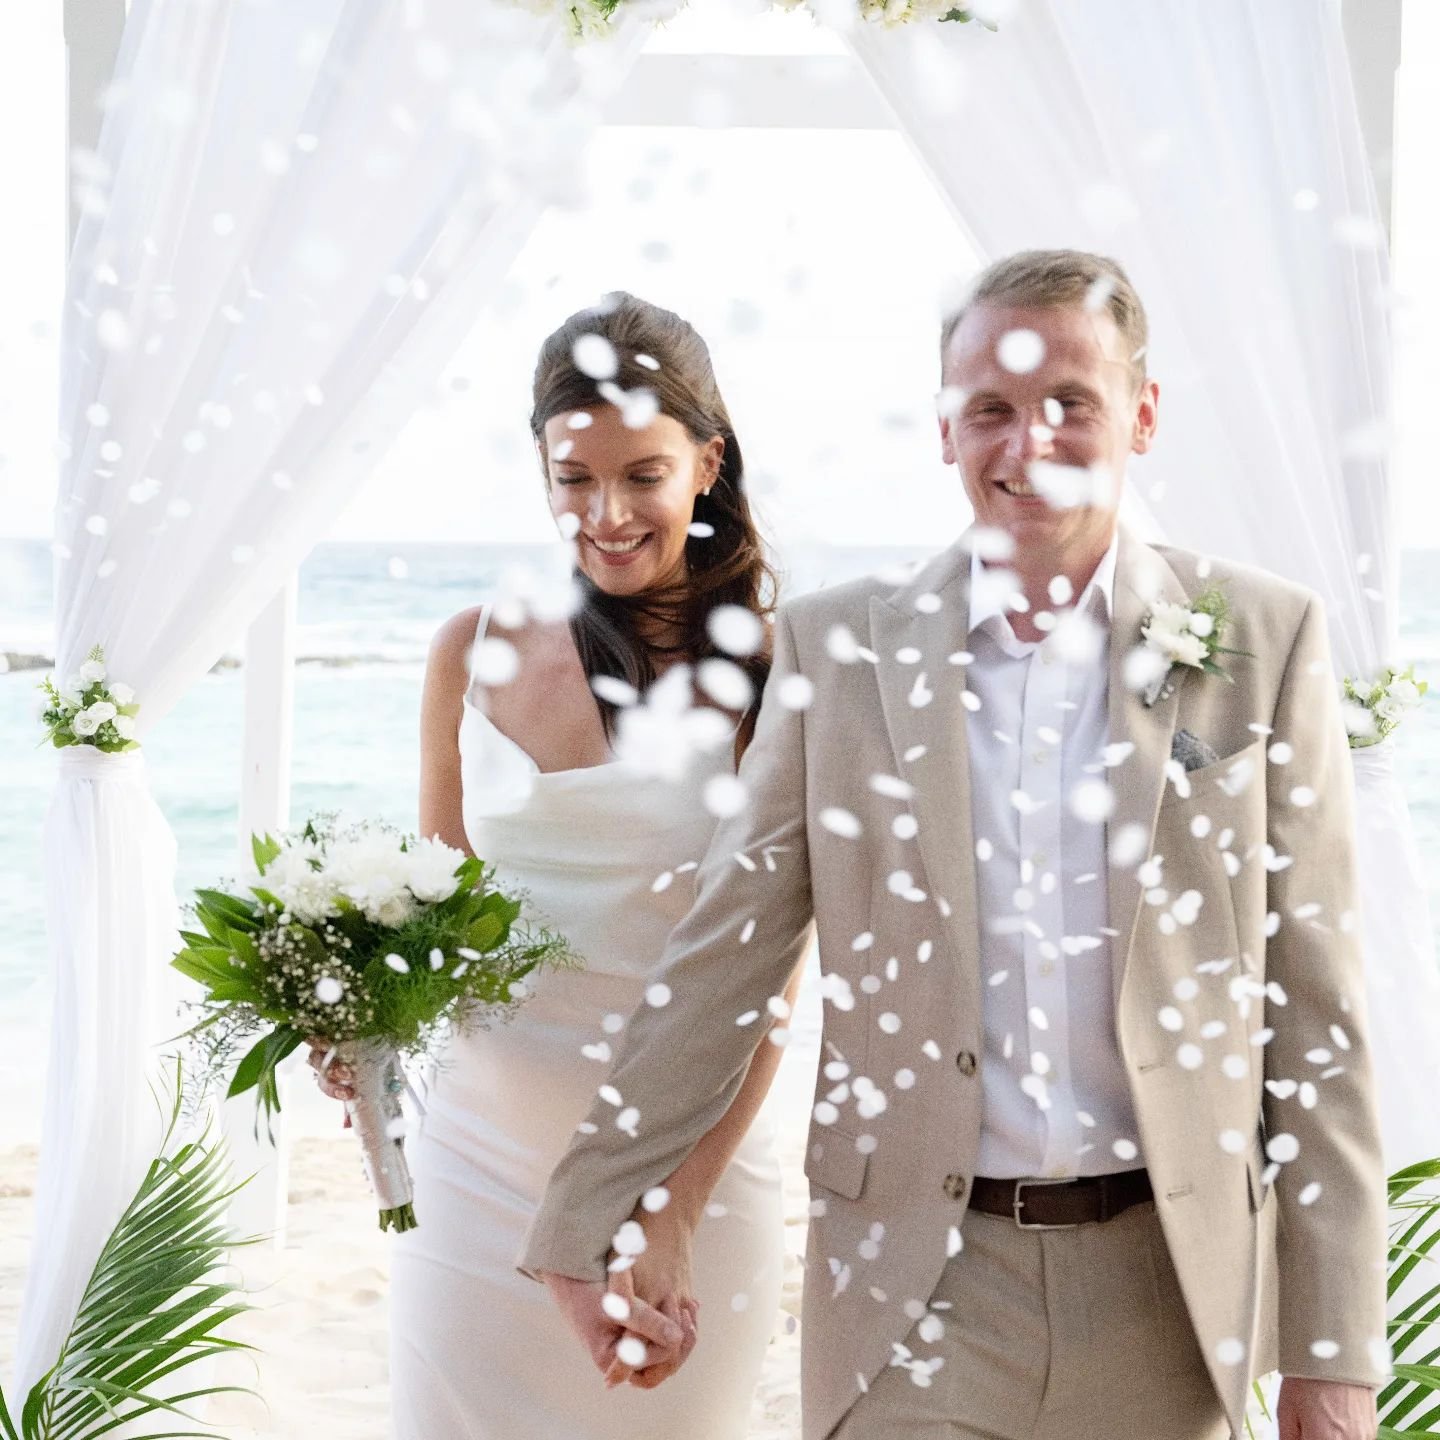 #weddings #weddingvideos #dji #mavic #mavicpro2 #nikon #nikonphotography #weddingphotography #barbados #barbadosweddings #caribbean #caribbeanwedding #rickychasephotography #videos #nikonz #nikonz9 #sigma #sigmaart #sigma50mm #sandylanehotel #stjames